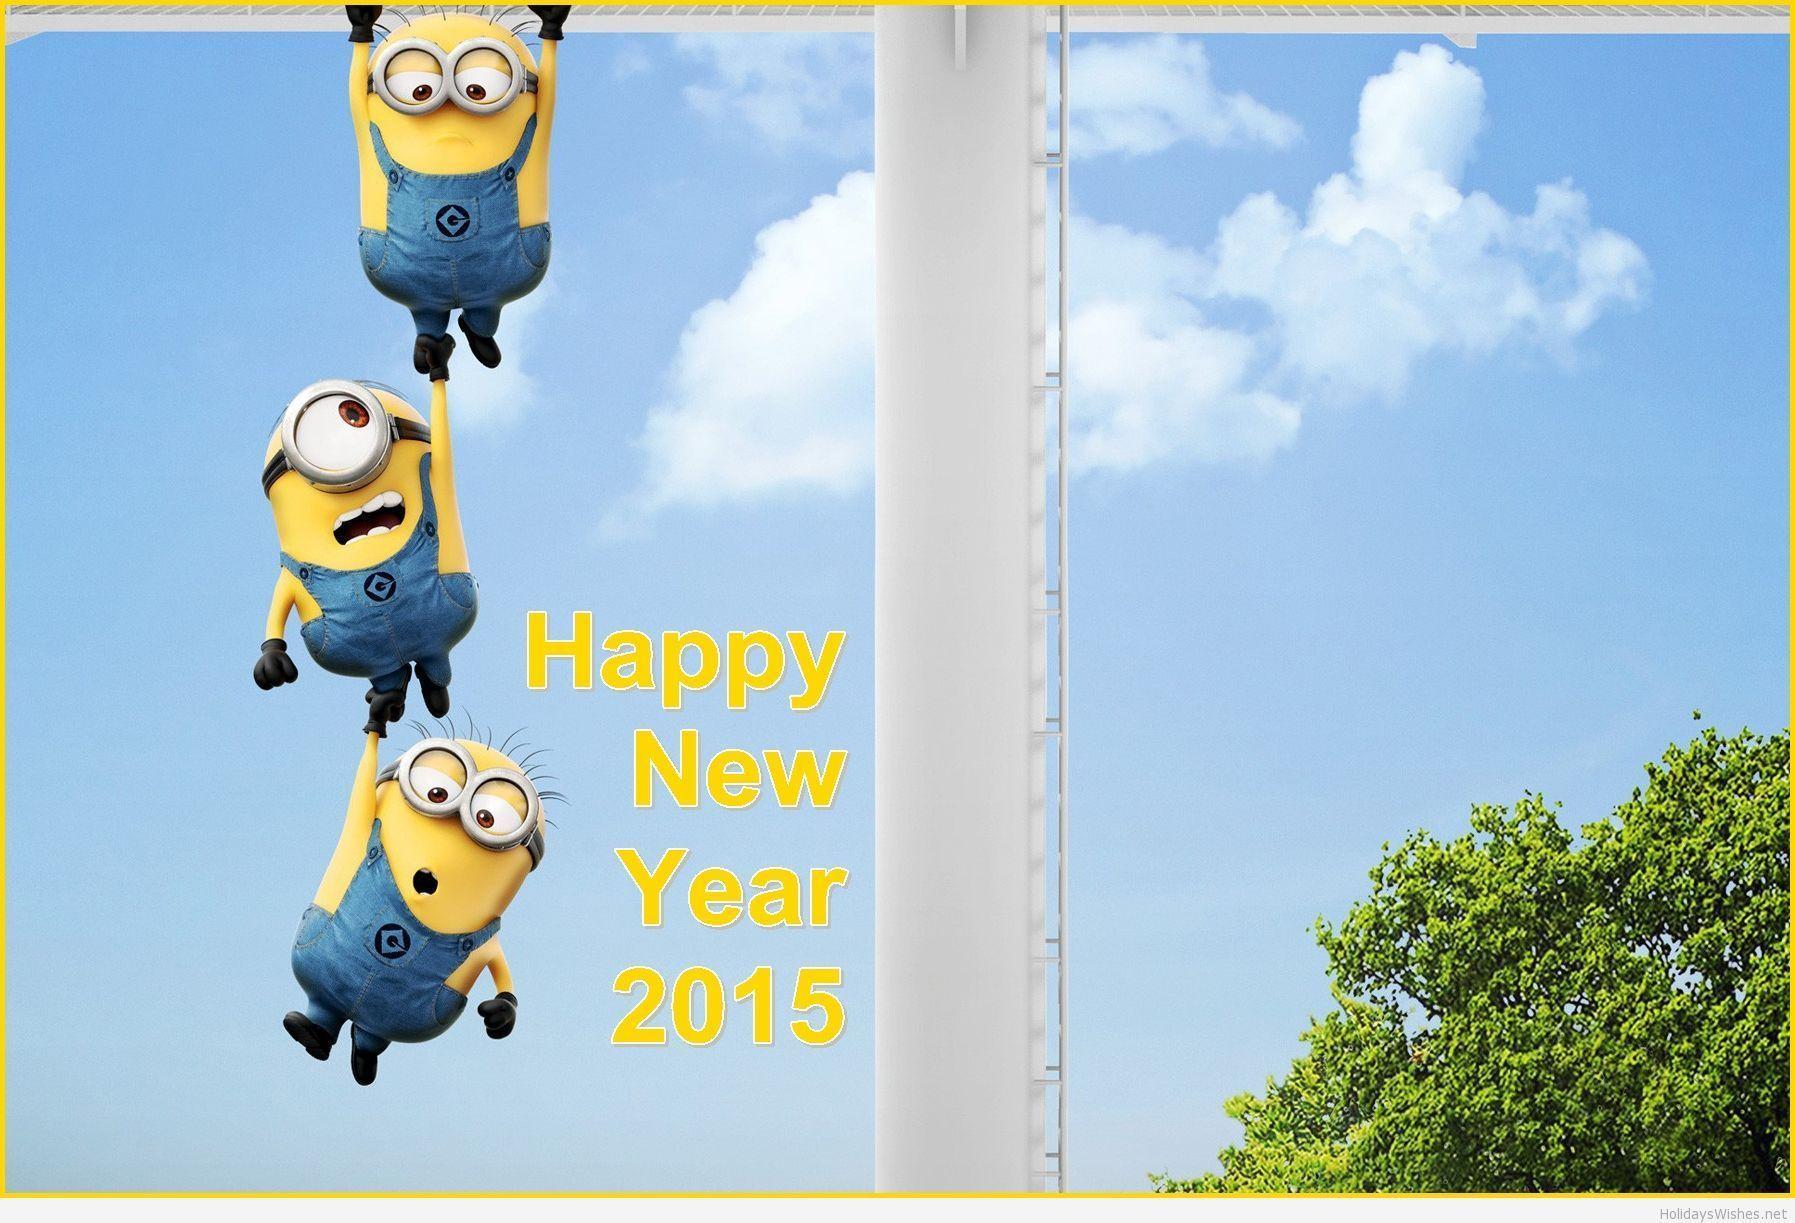 Minions wallpaper wish for 2015